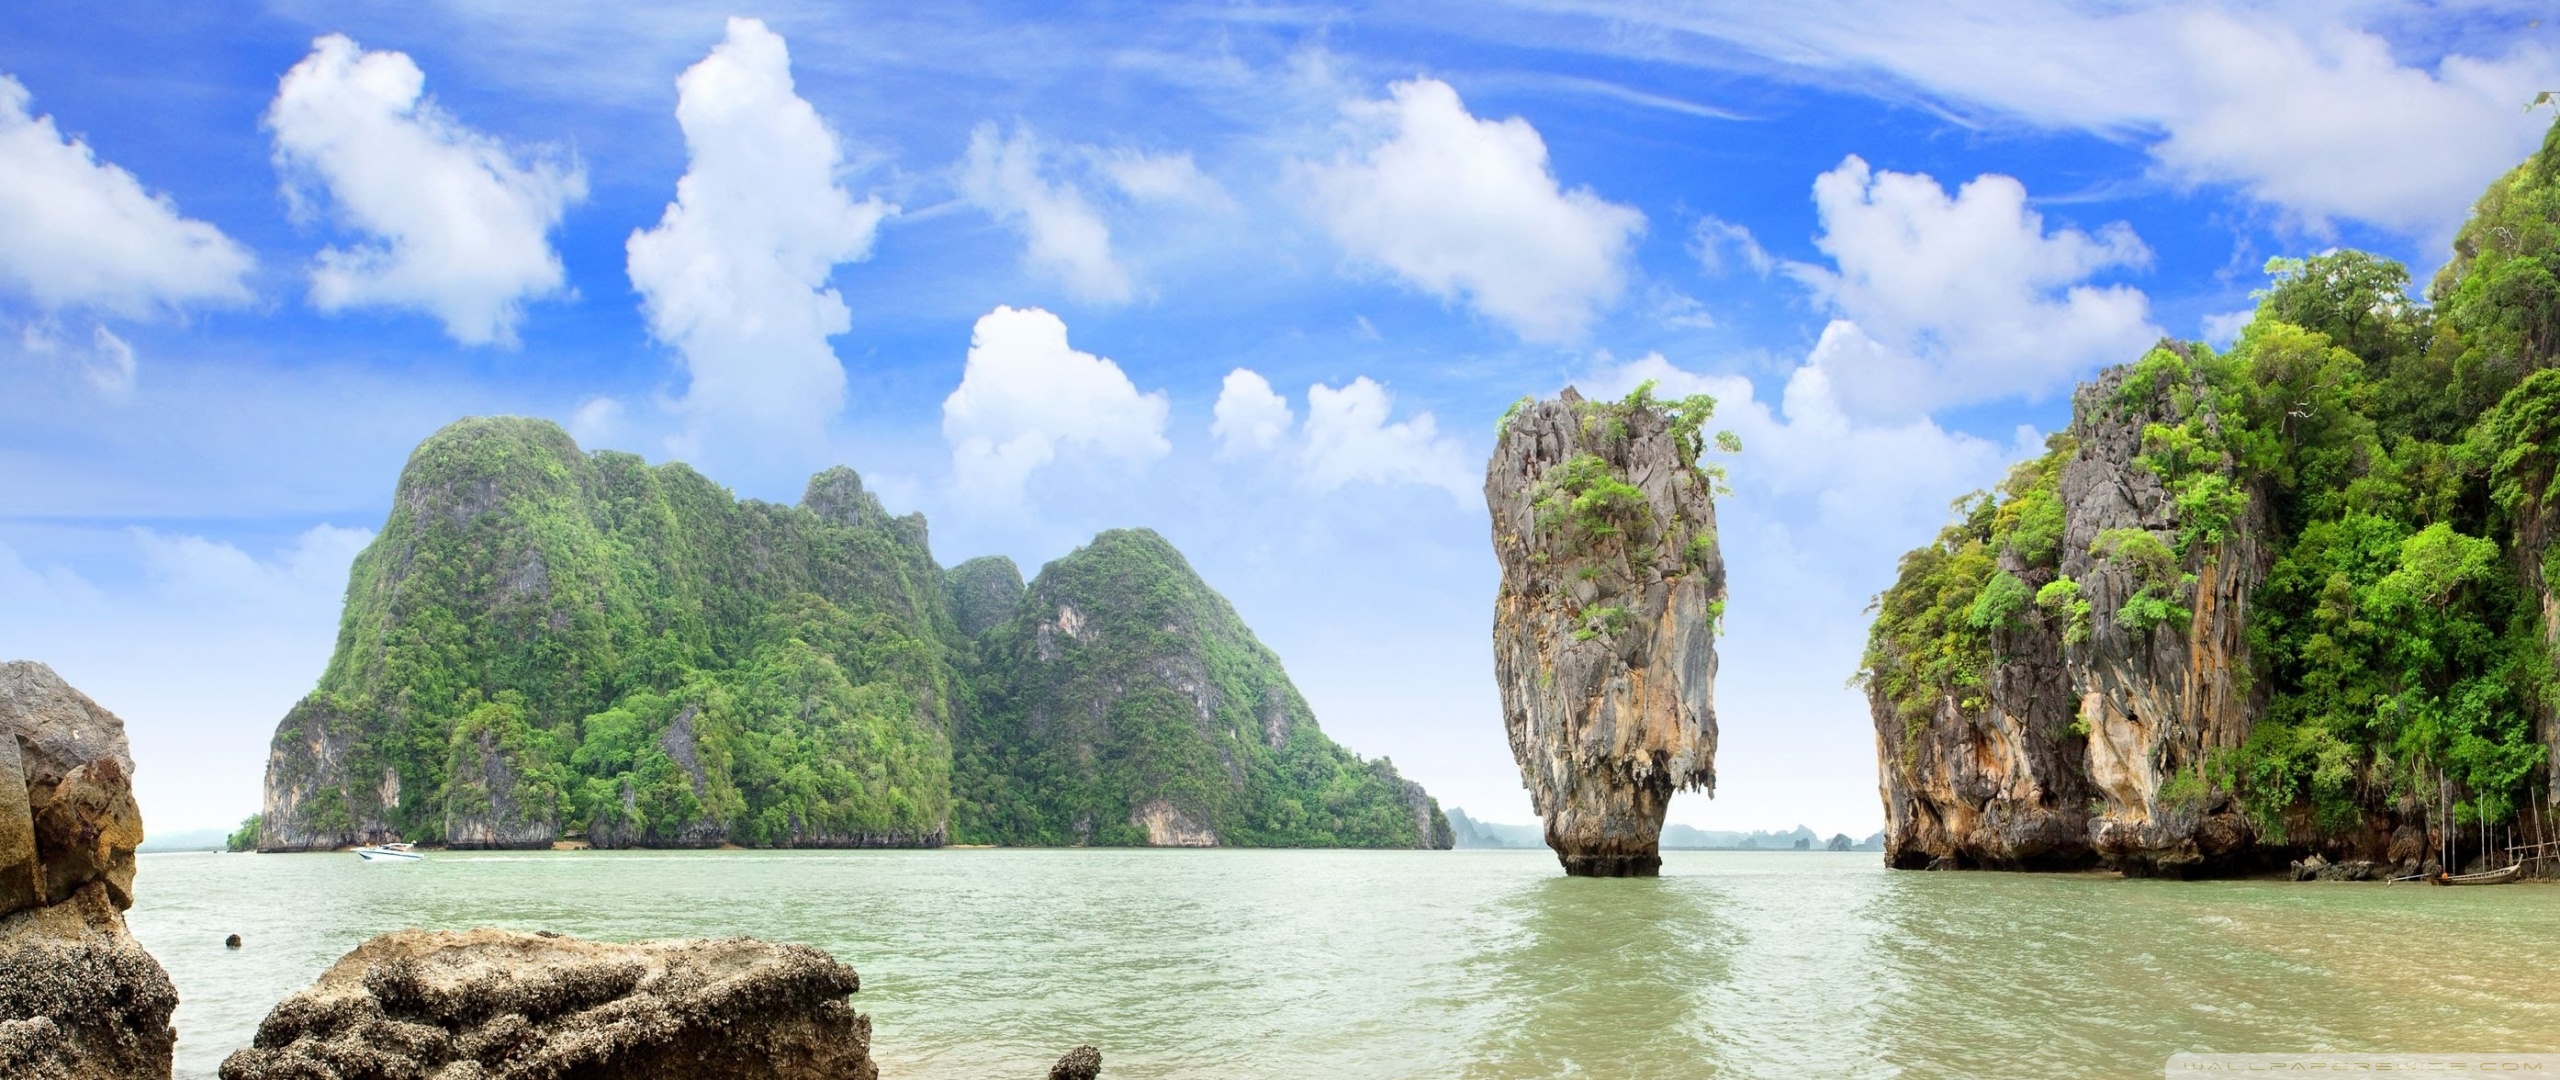 Thailand Islands Â¤ 4k Hd Desktop Wallpaper For 4k - 21 9 Wallpaper Island - HD Wallpaper 